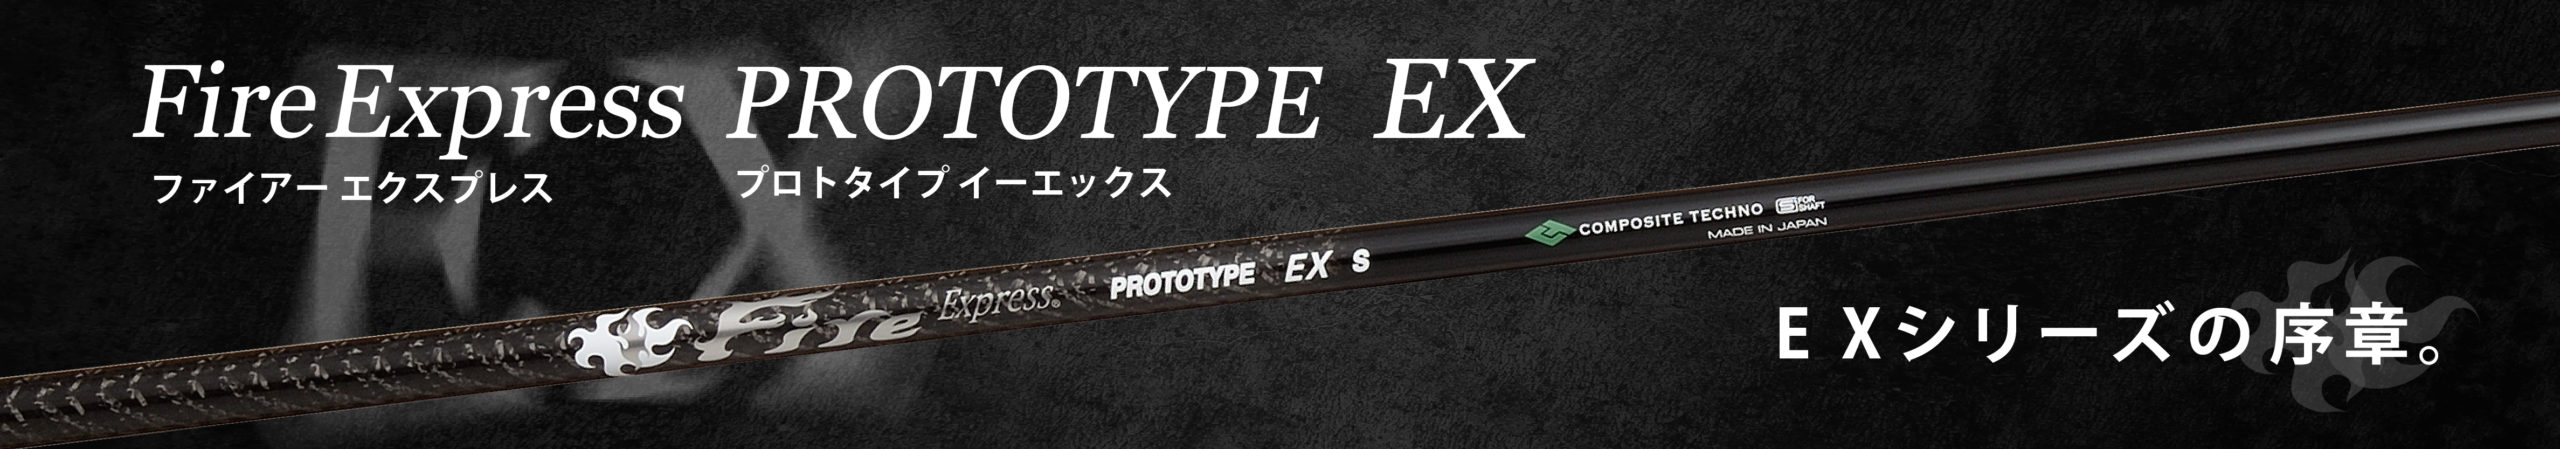 Fire Express PROTOTYPE EX